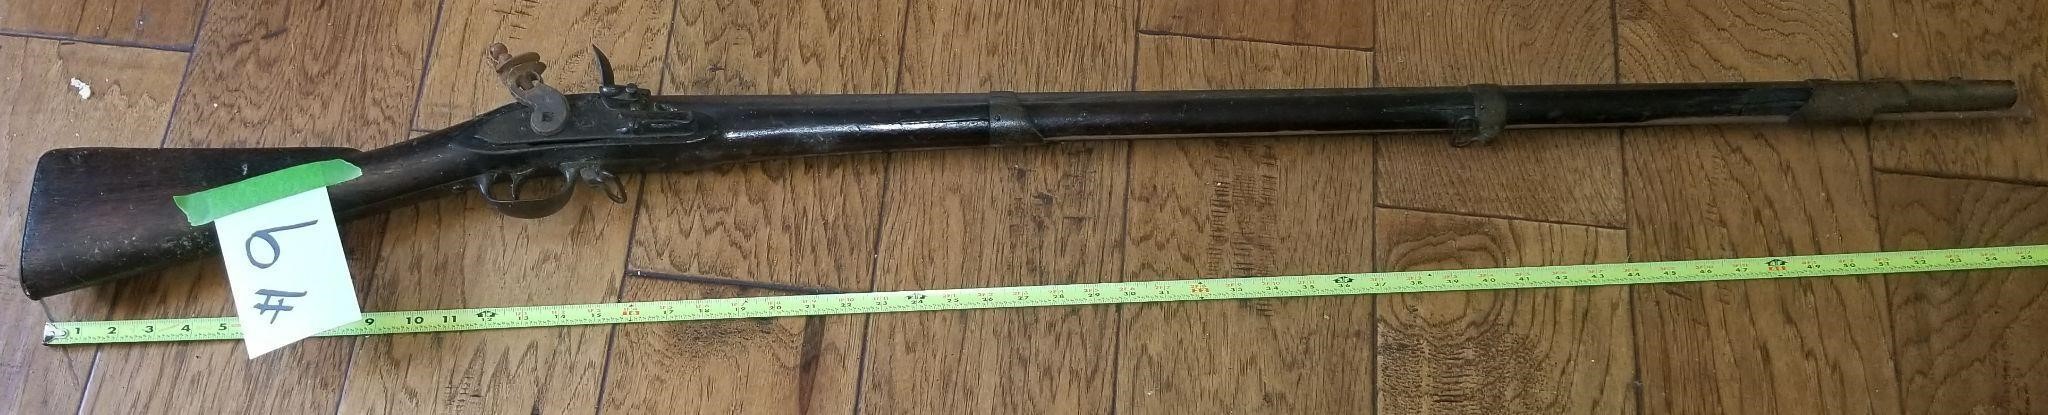 1800’s Antique Springfield Flint Lock Rifle-